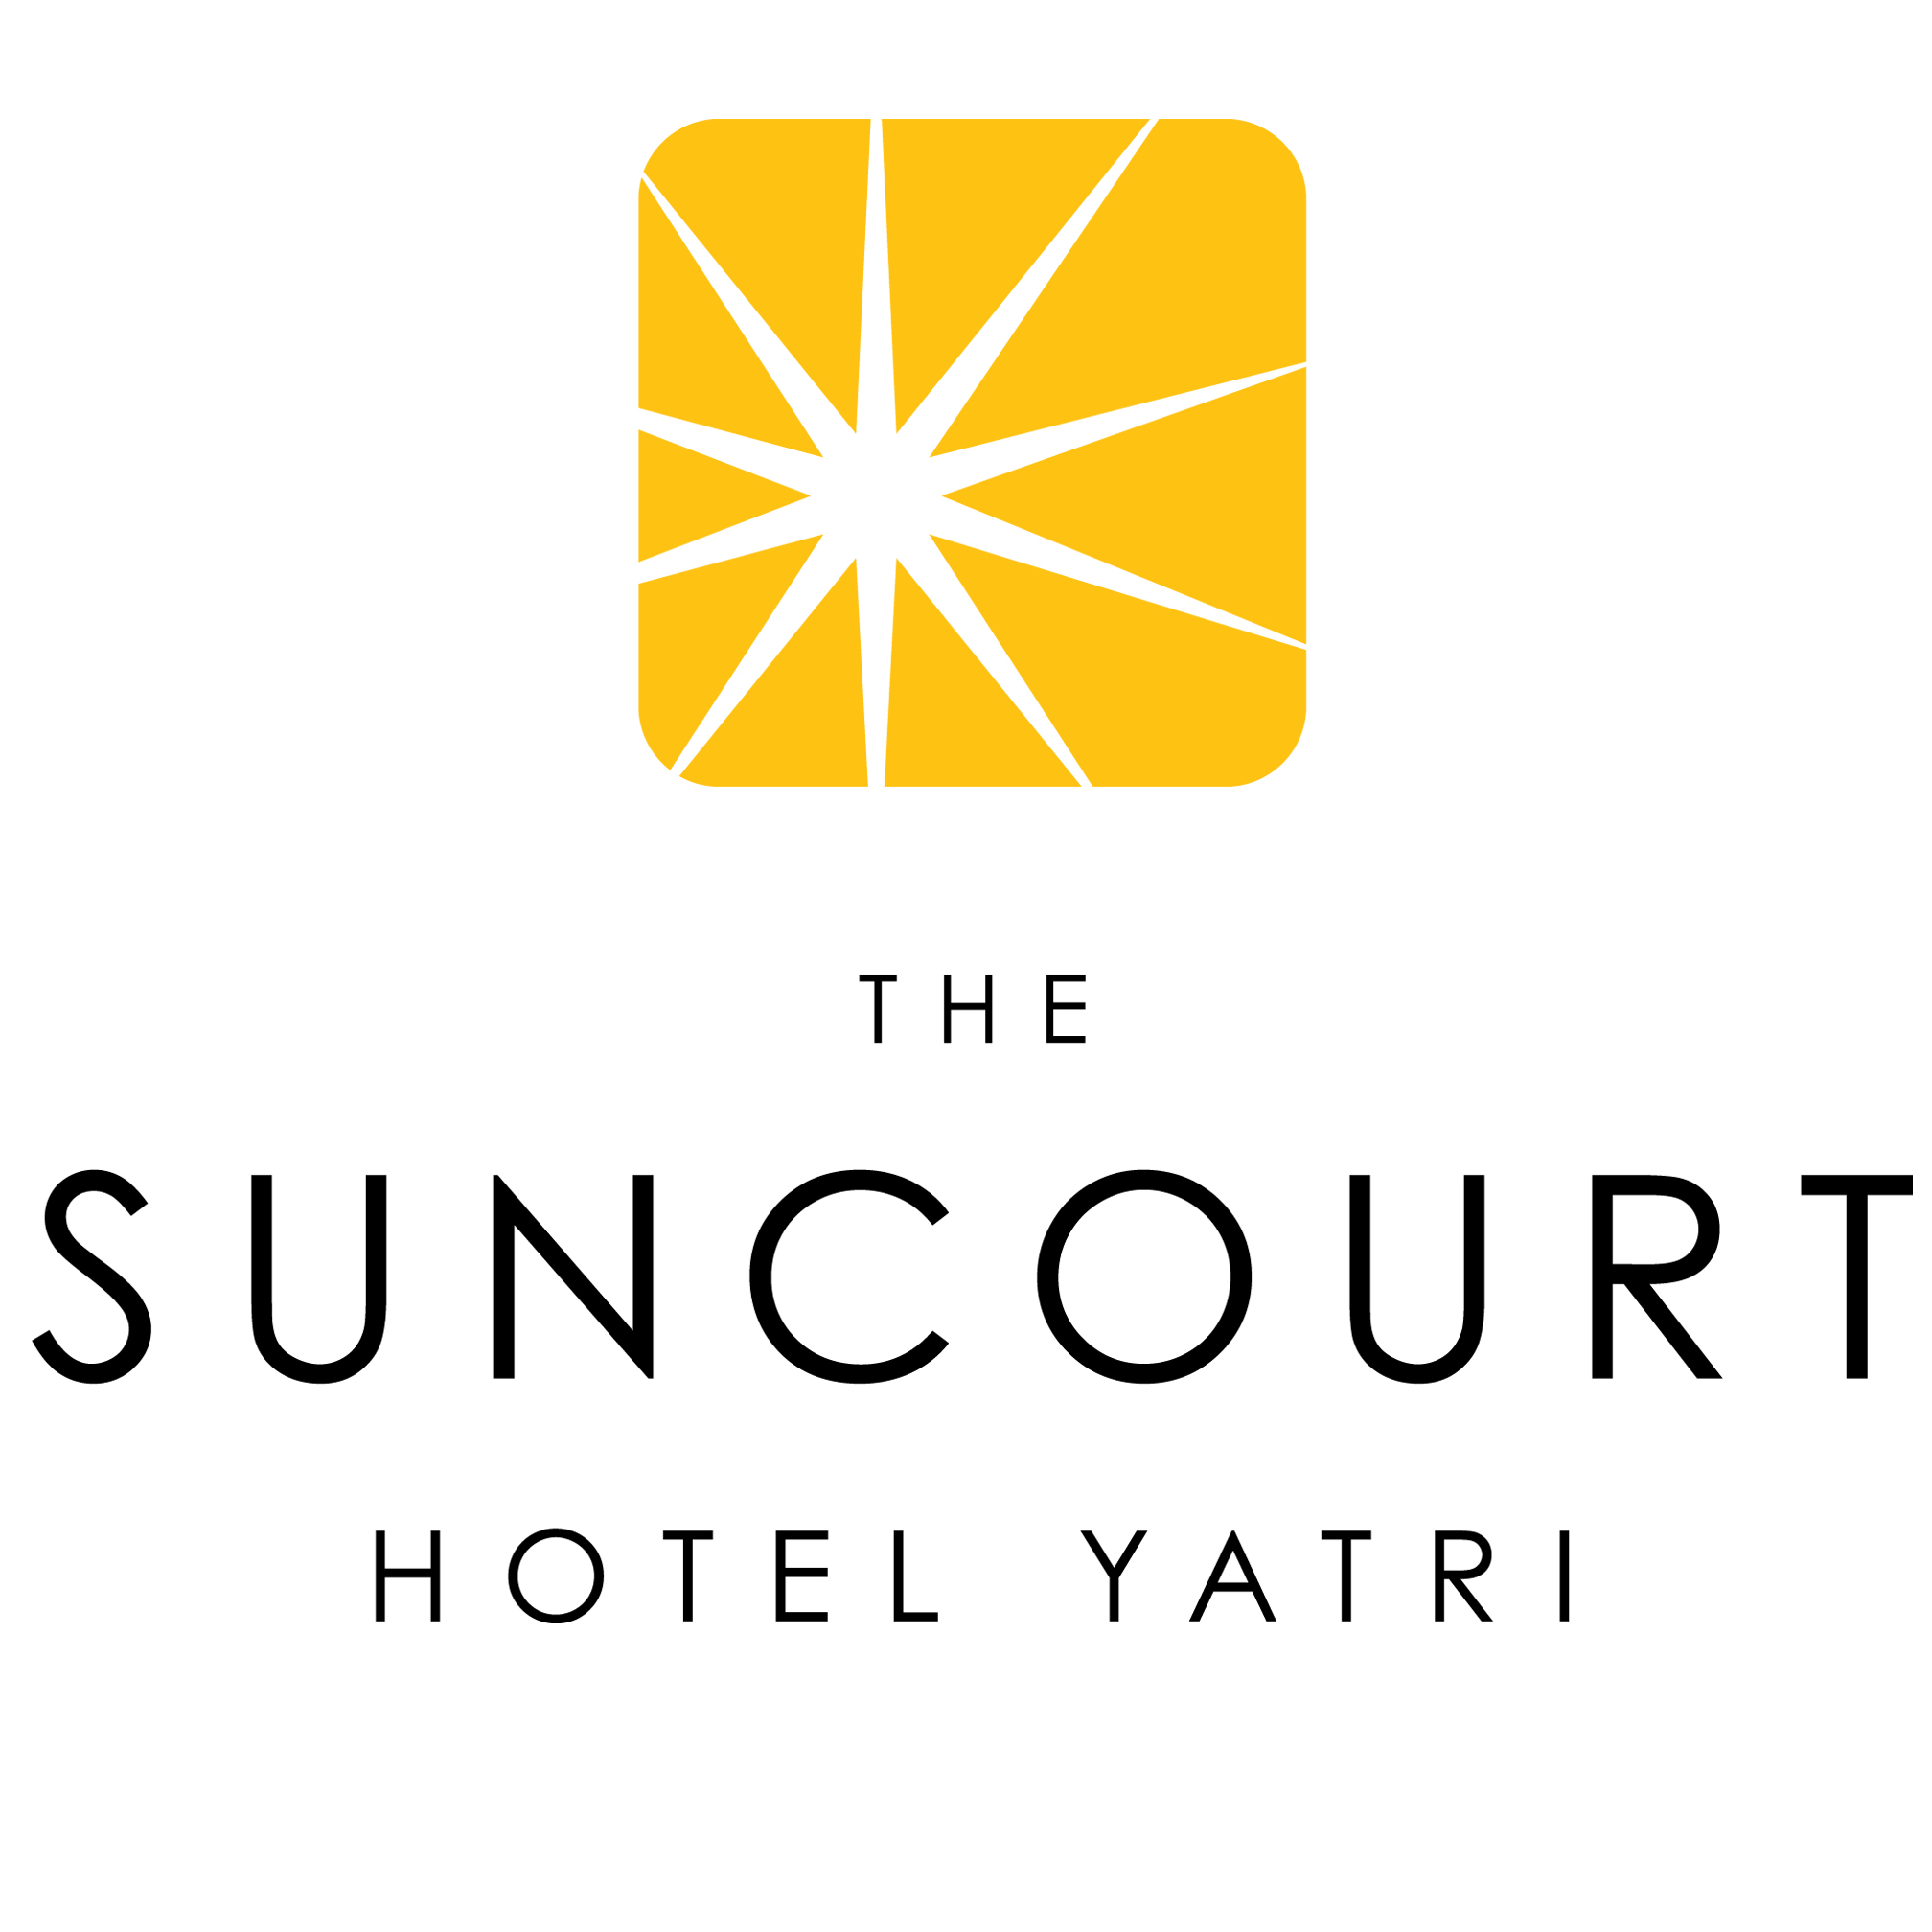 Suncourt Hotel Yatri - New Delhi, India